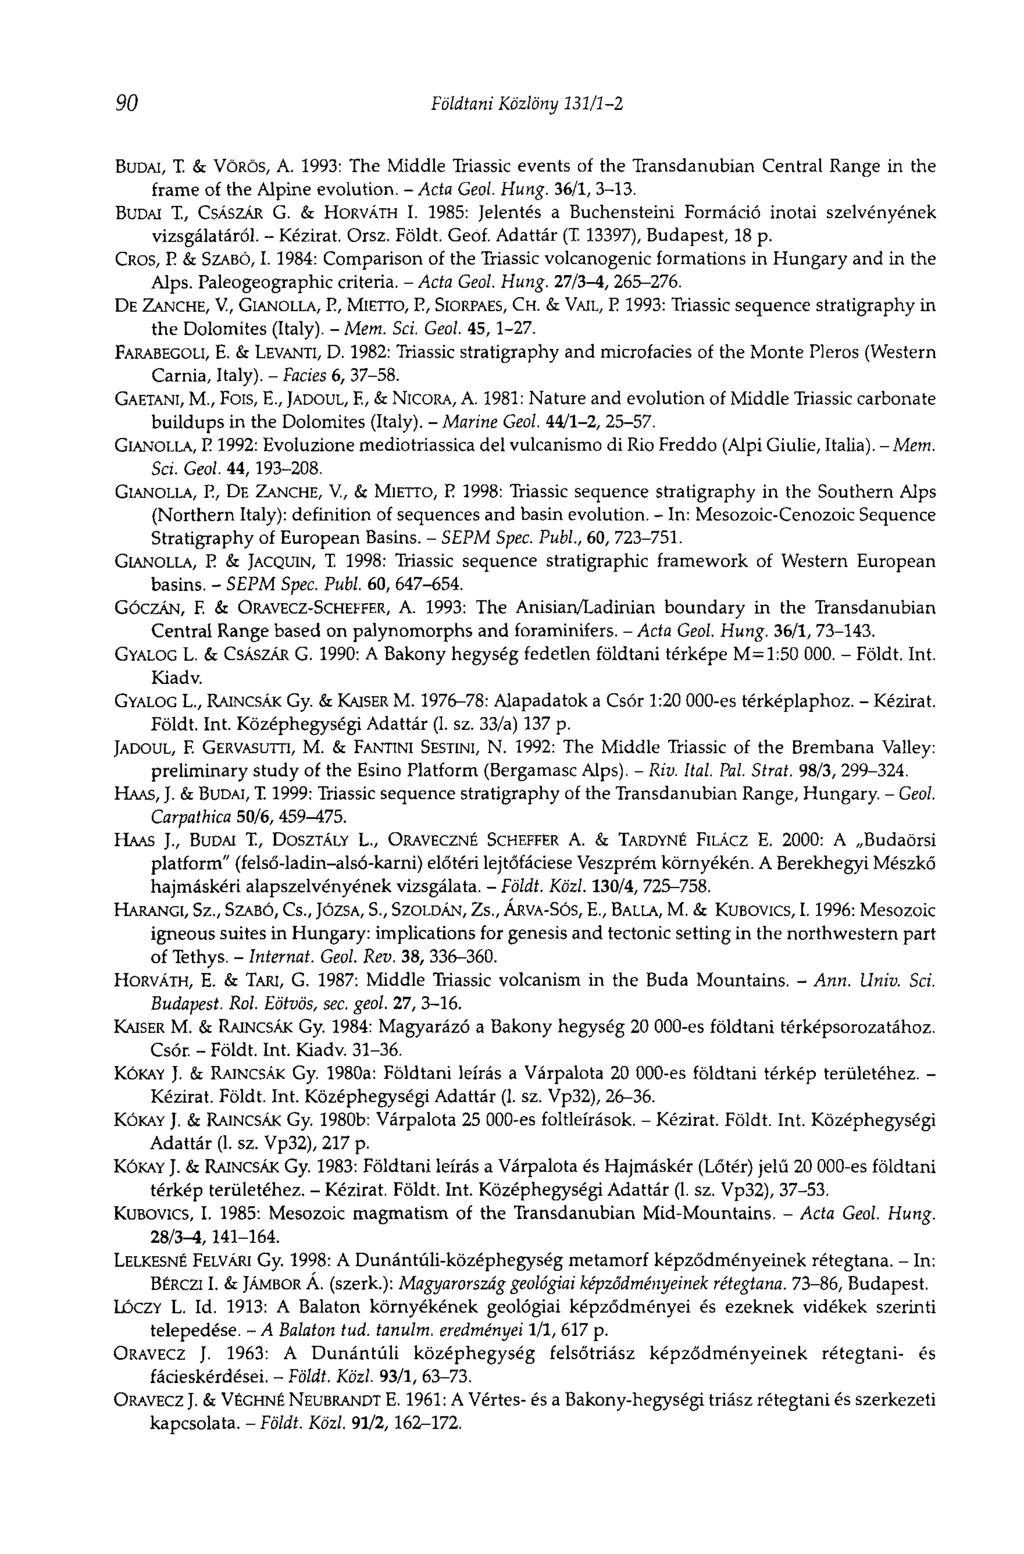 90 Földtani Közlöny 131/1-2 BUDAI, T. & VÖRÖS, A. 1993: The Middle Triassic events of the Transdanubian Central Range in the frame of the Alpine evolution. - Acta Geol. Hung. 36/1, 3-13. BUDAI T.